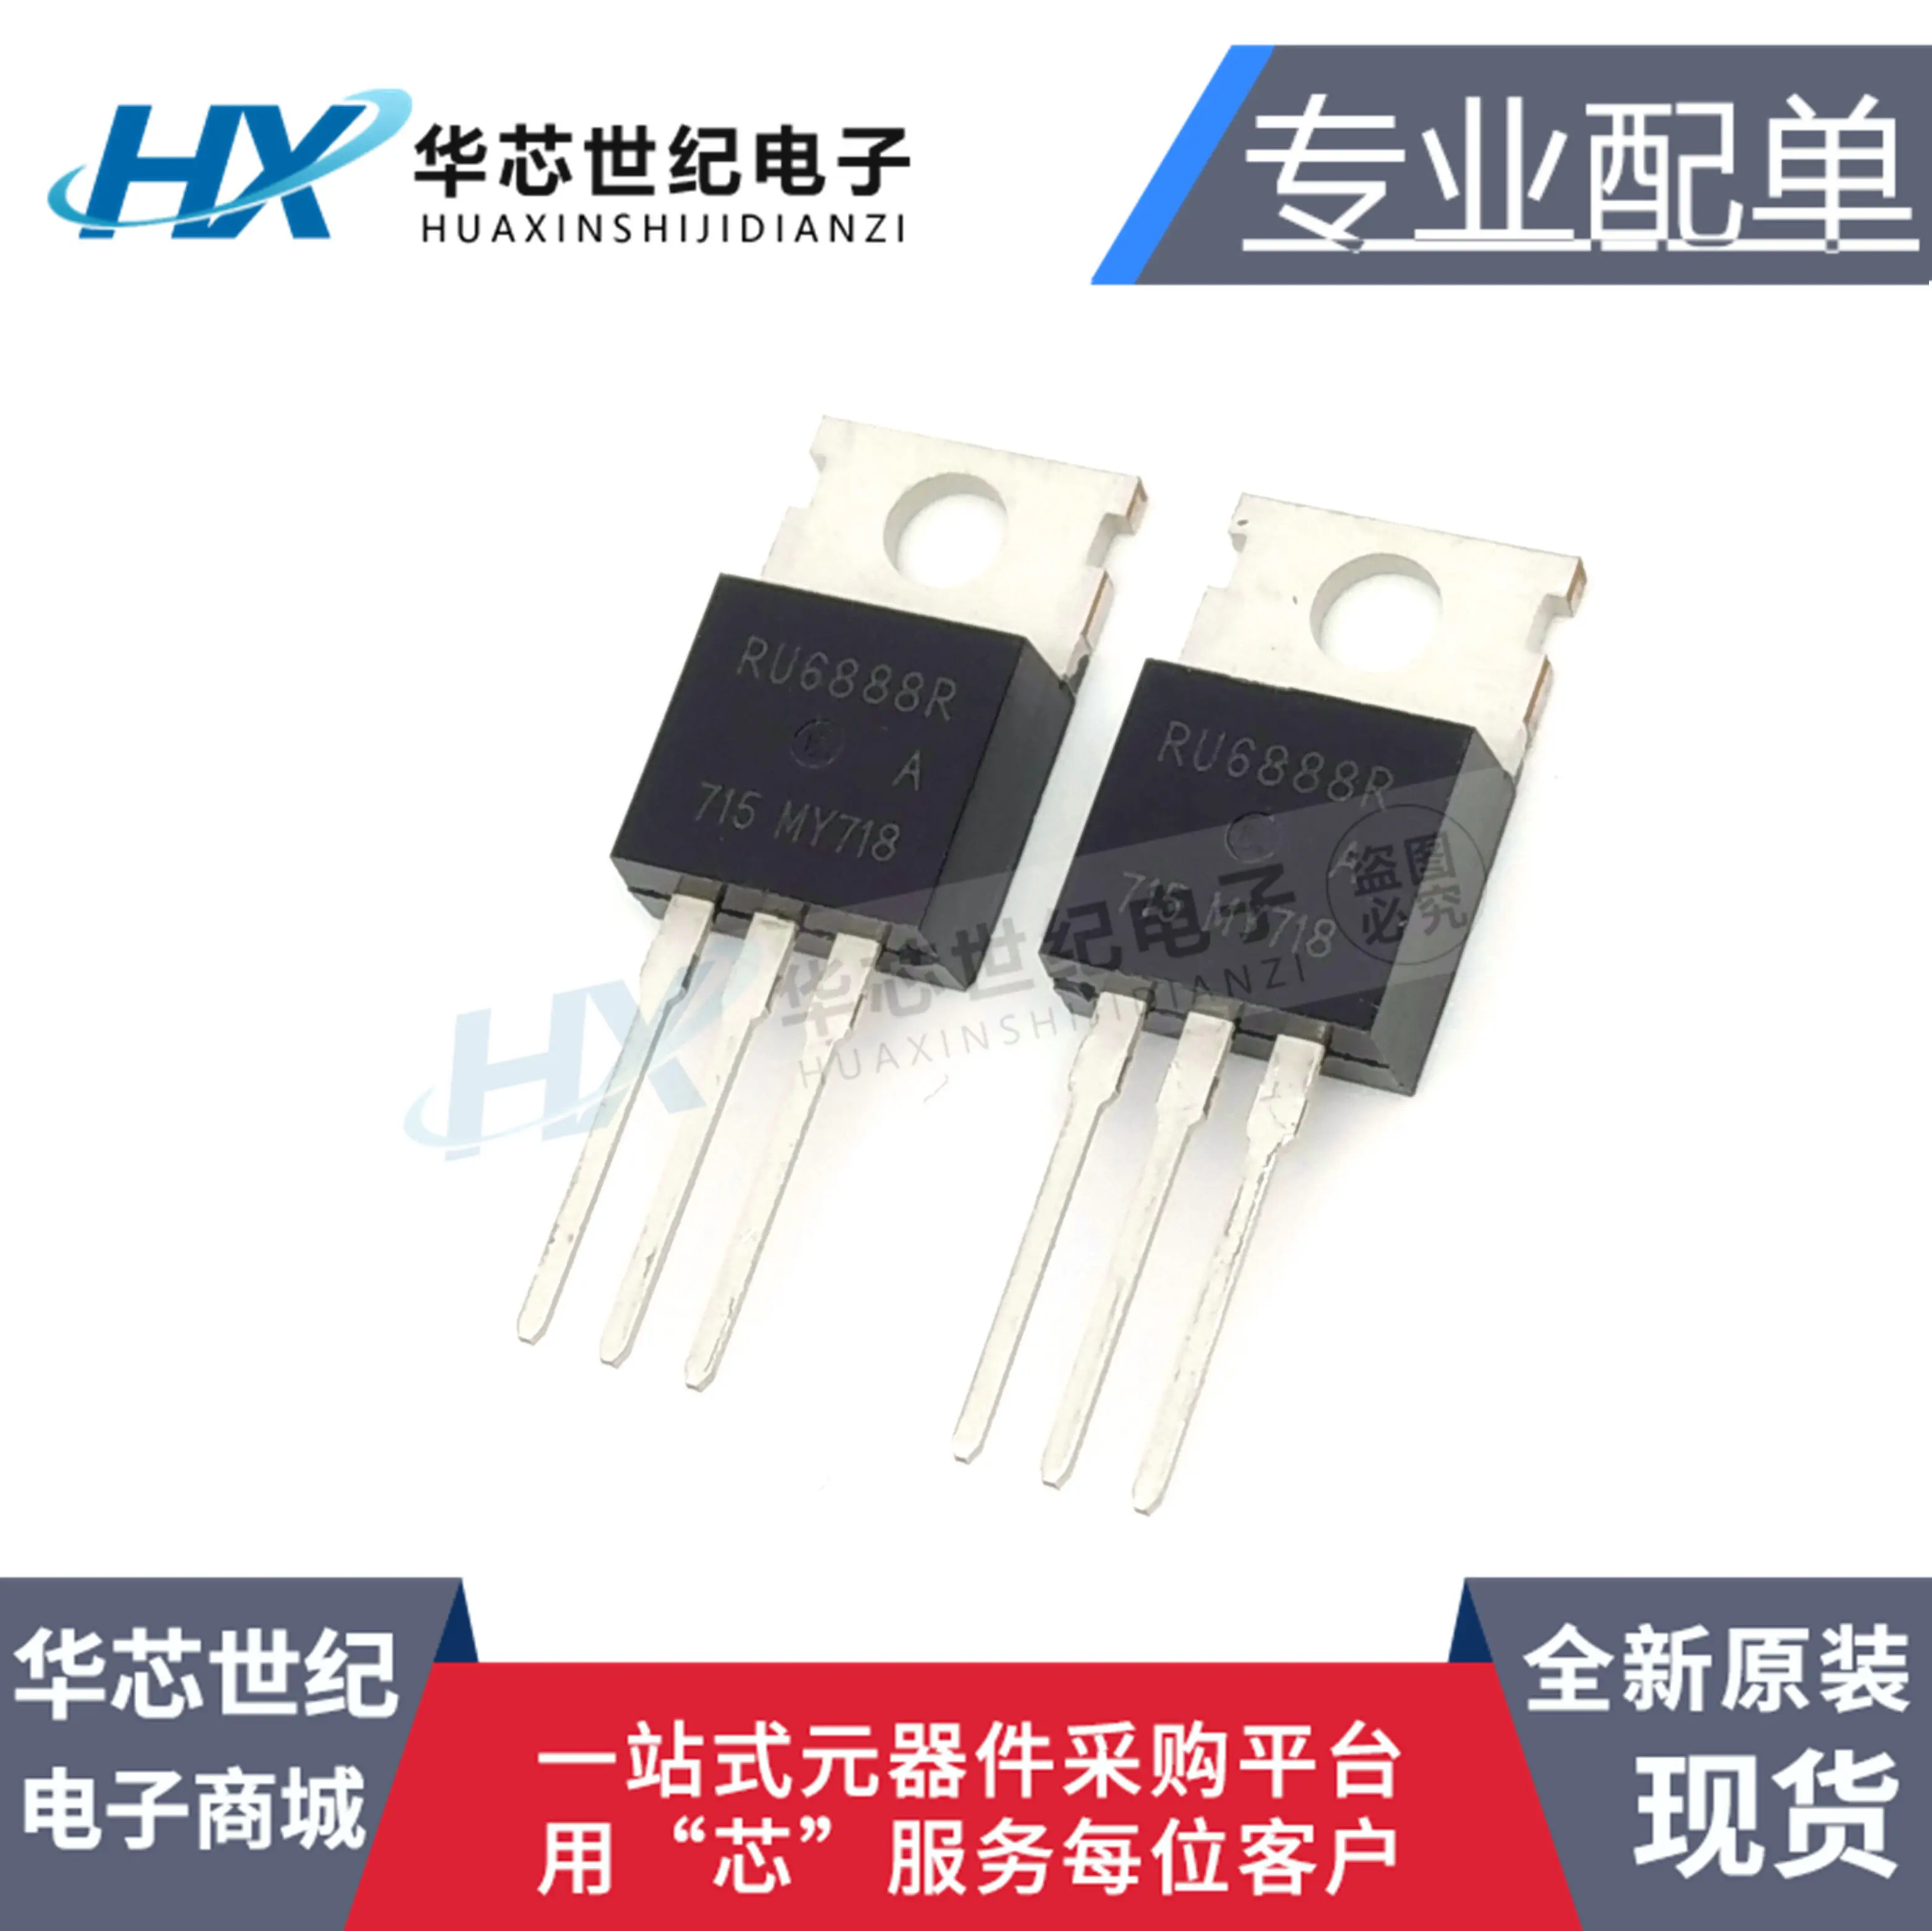 

30pcs original new RU6888R 688R transistor TO-220 MOS field-effect transistor controller